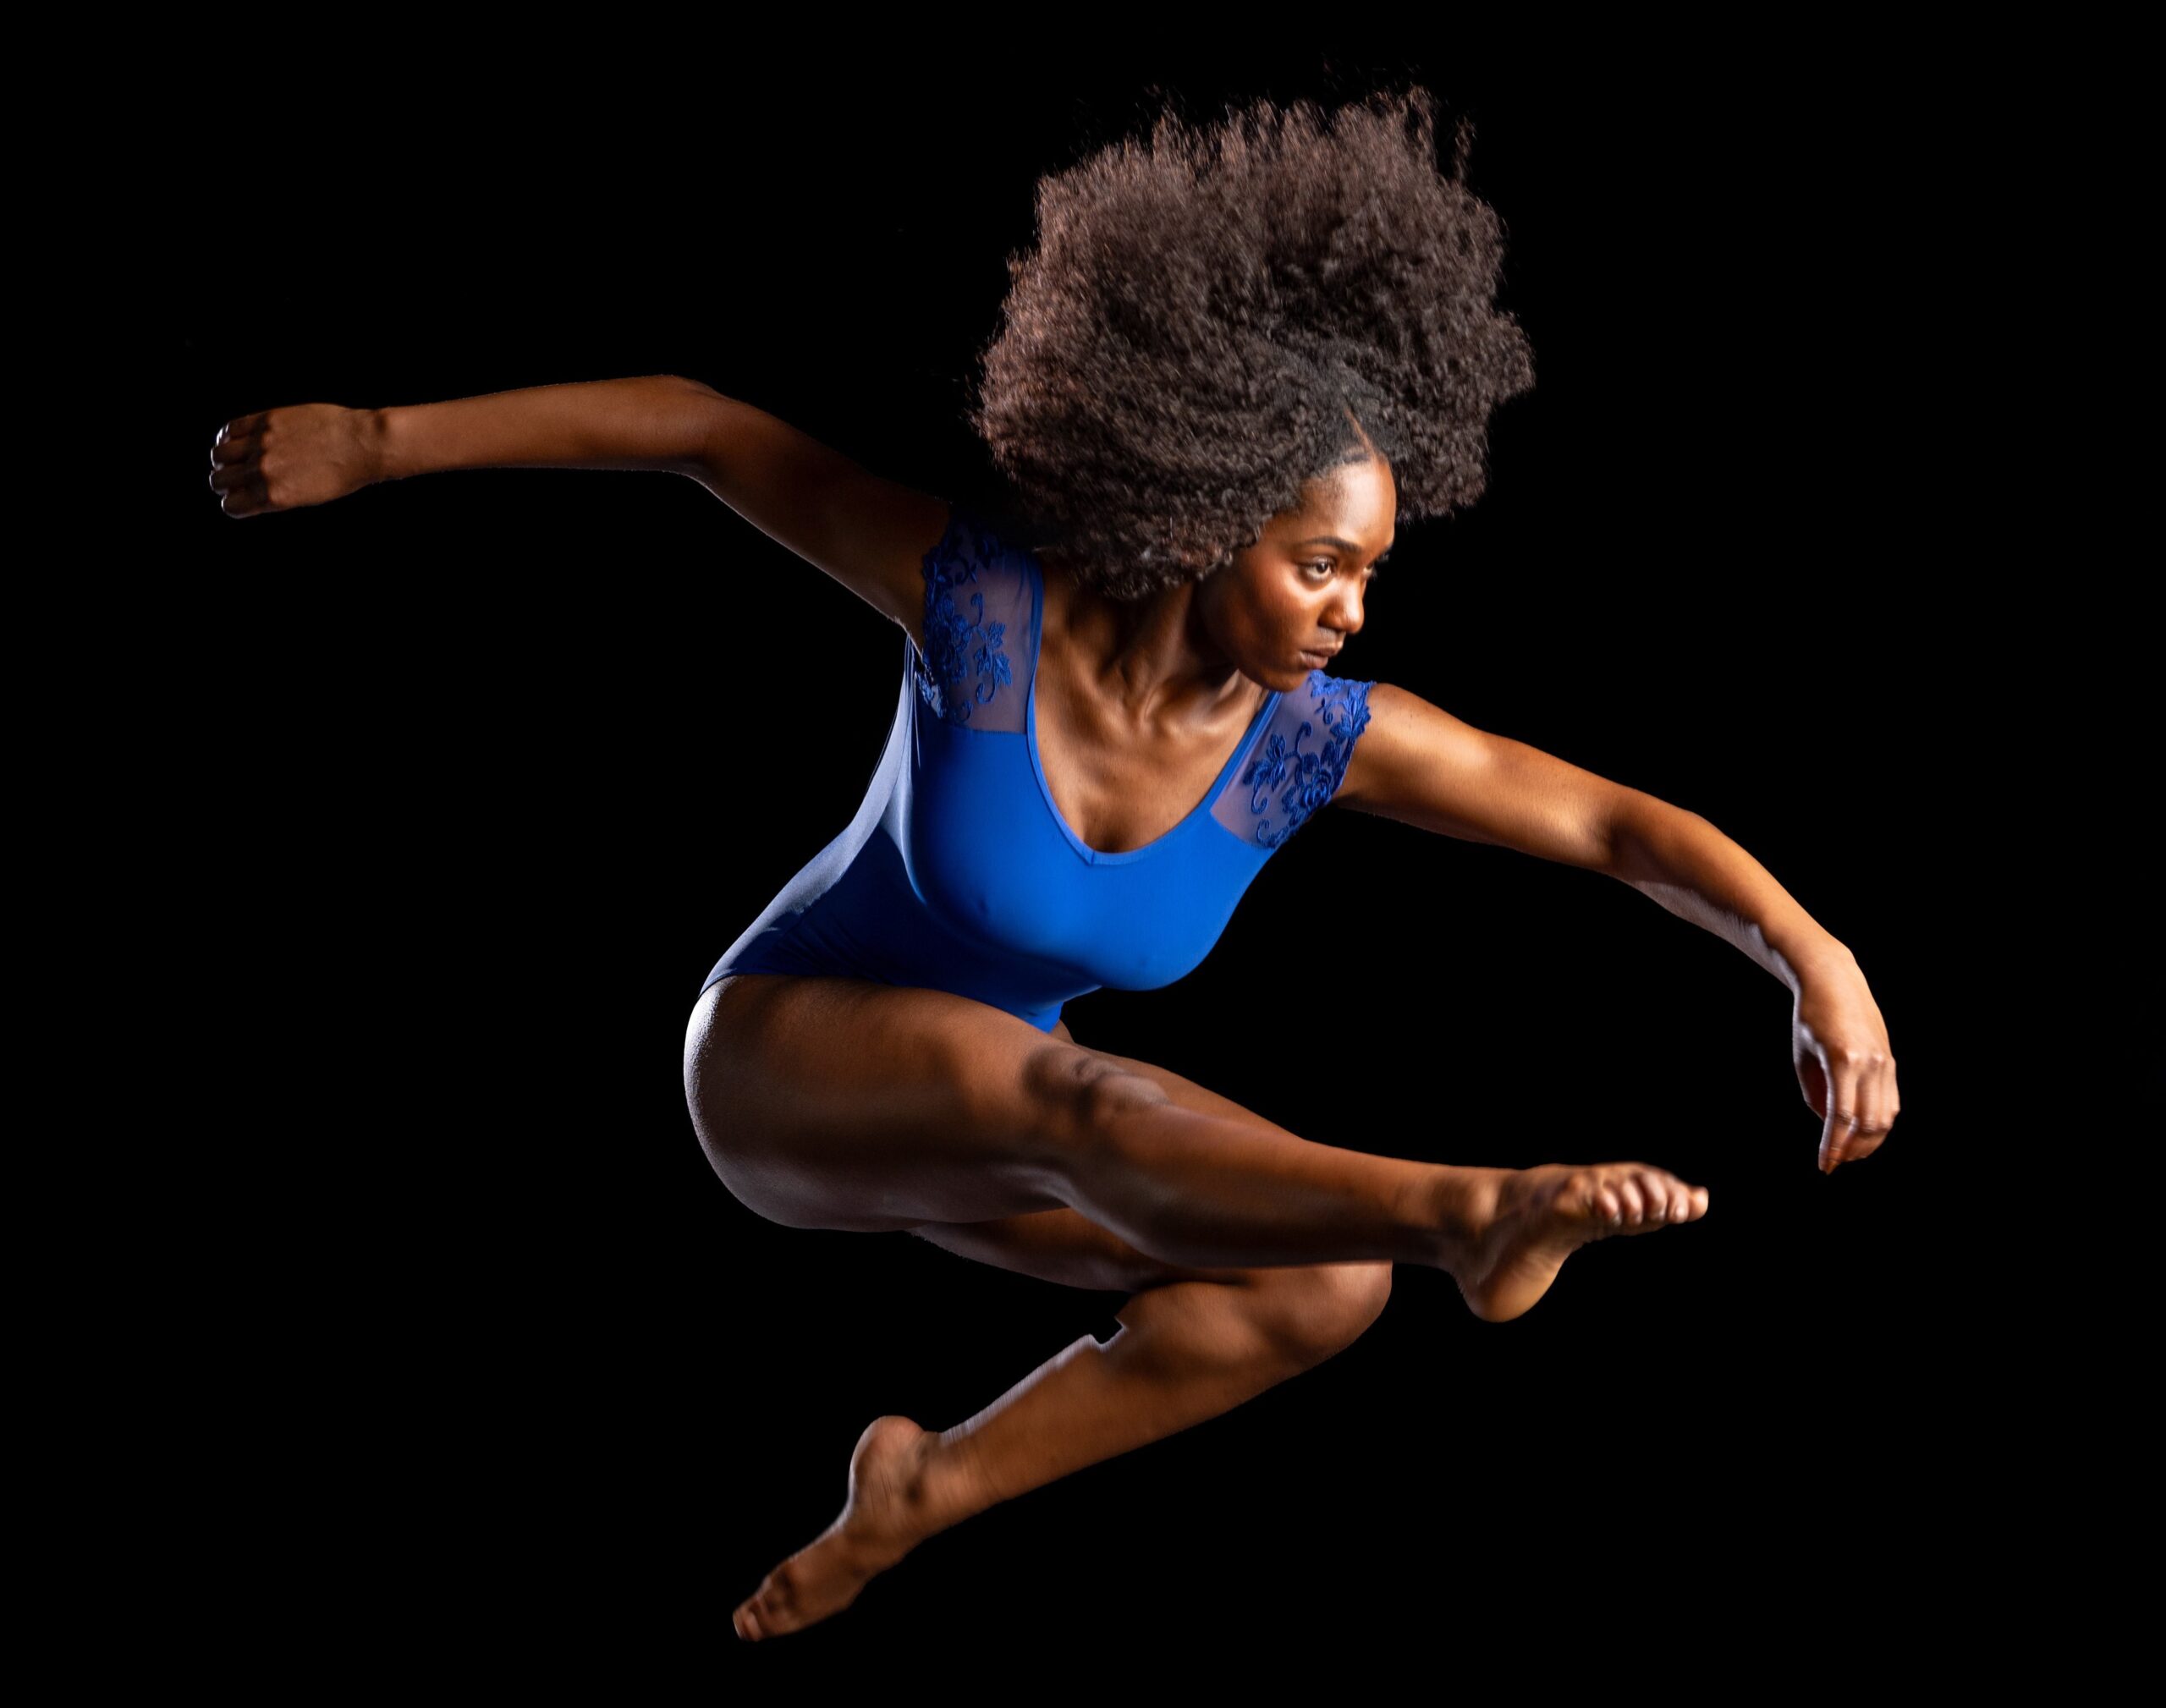 a female dancer wearing a blue leotard jumping in the air against a dark backdrop